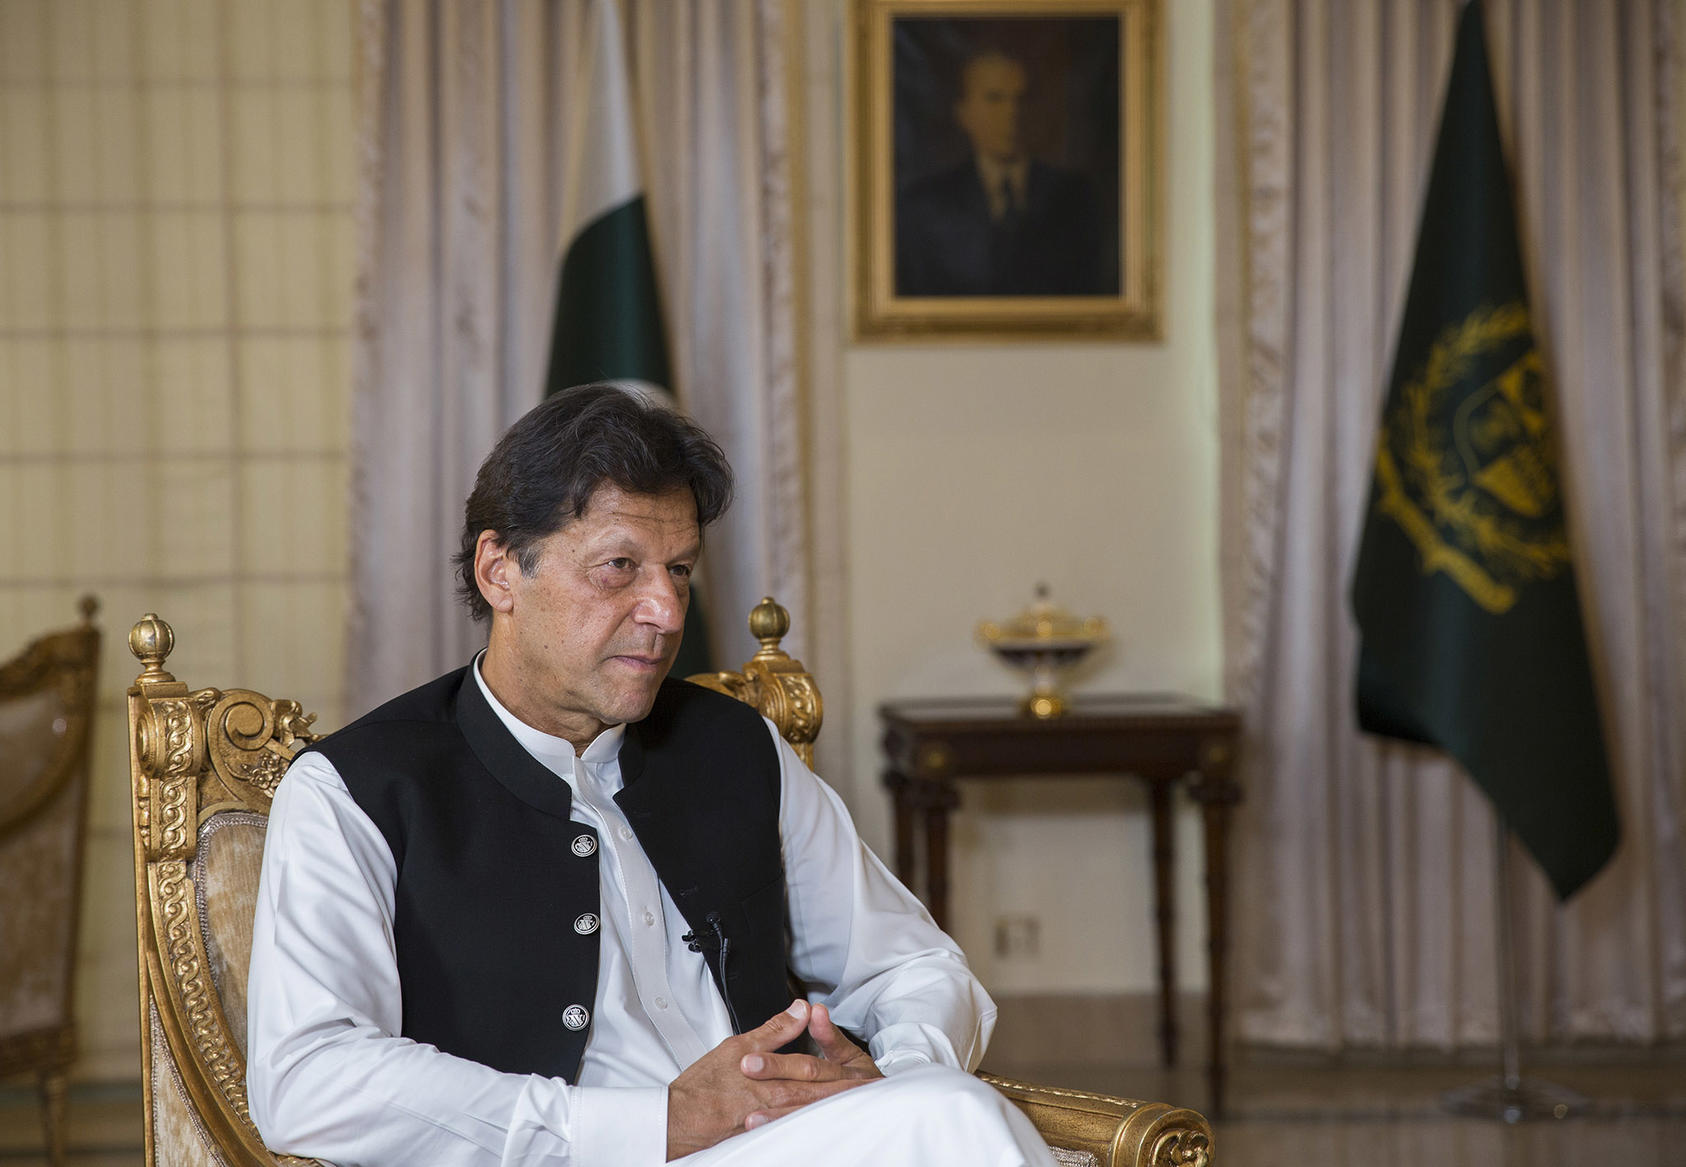 Prime Minister Imran Khan of Pakistan at his residence in Islamabad, Pakistan. April 9, 2019. (Saiyna Bashir/The New York Times)